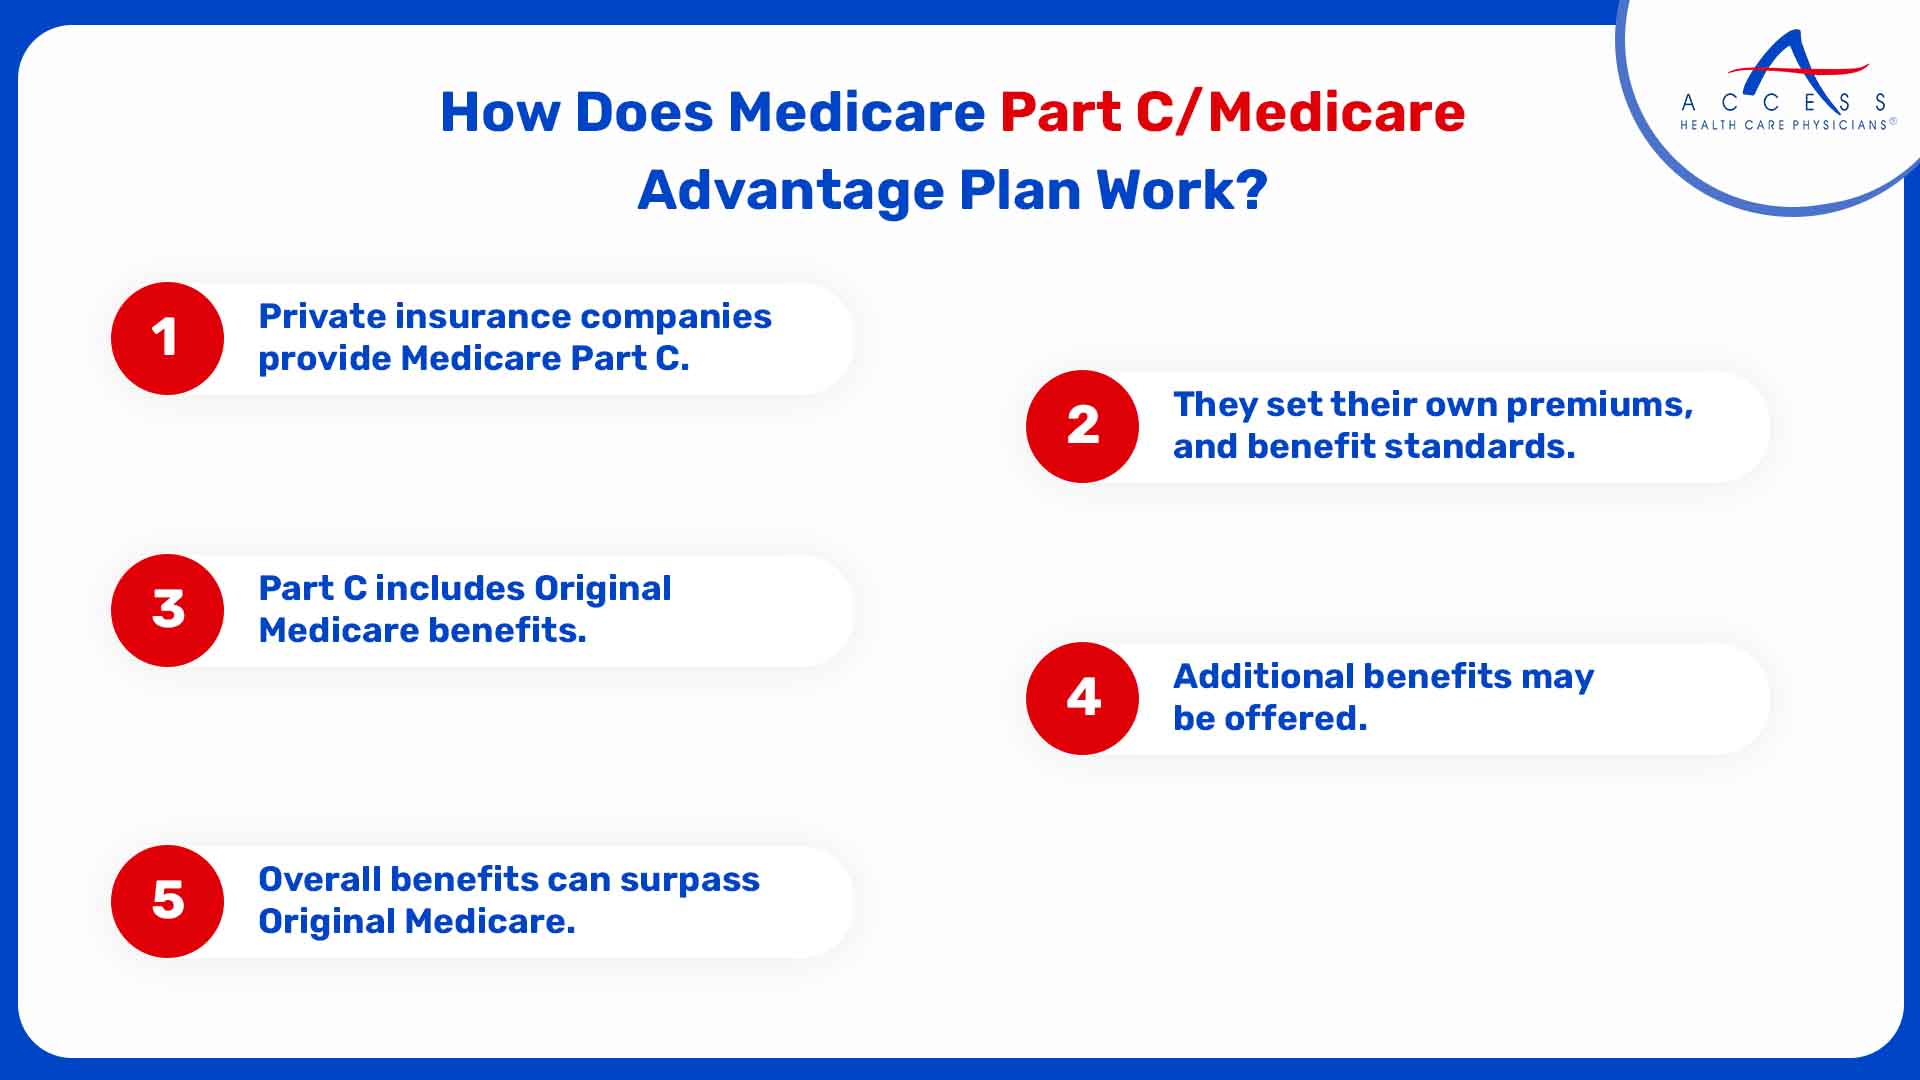 How Does Medicare Part C/Medicare Advantage Plan Work?